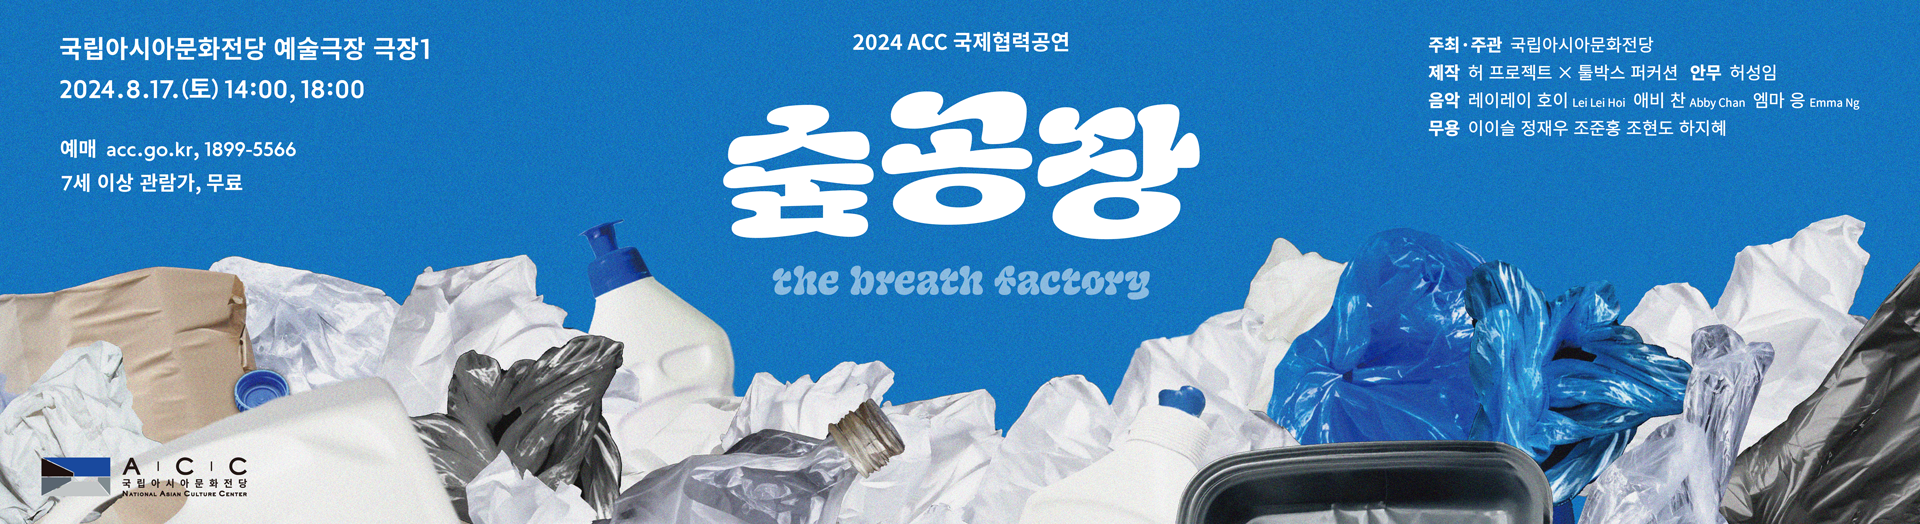 2024 ACC International Cooperation New Work Development Showcase “The Breath Factory”